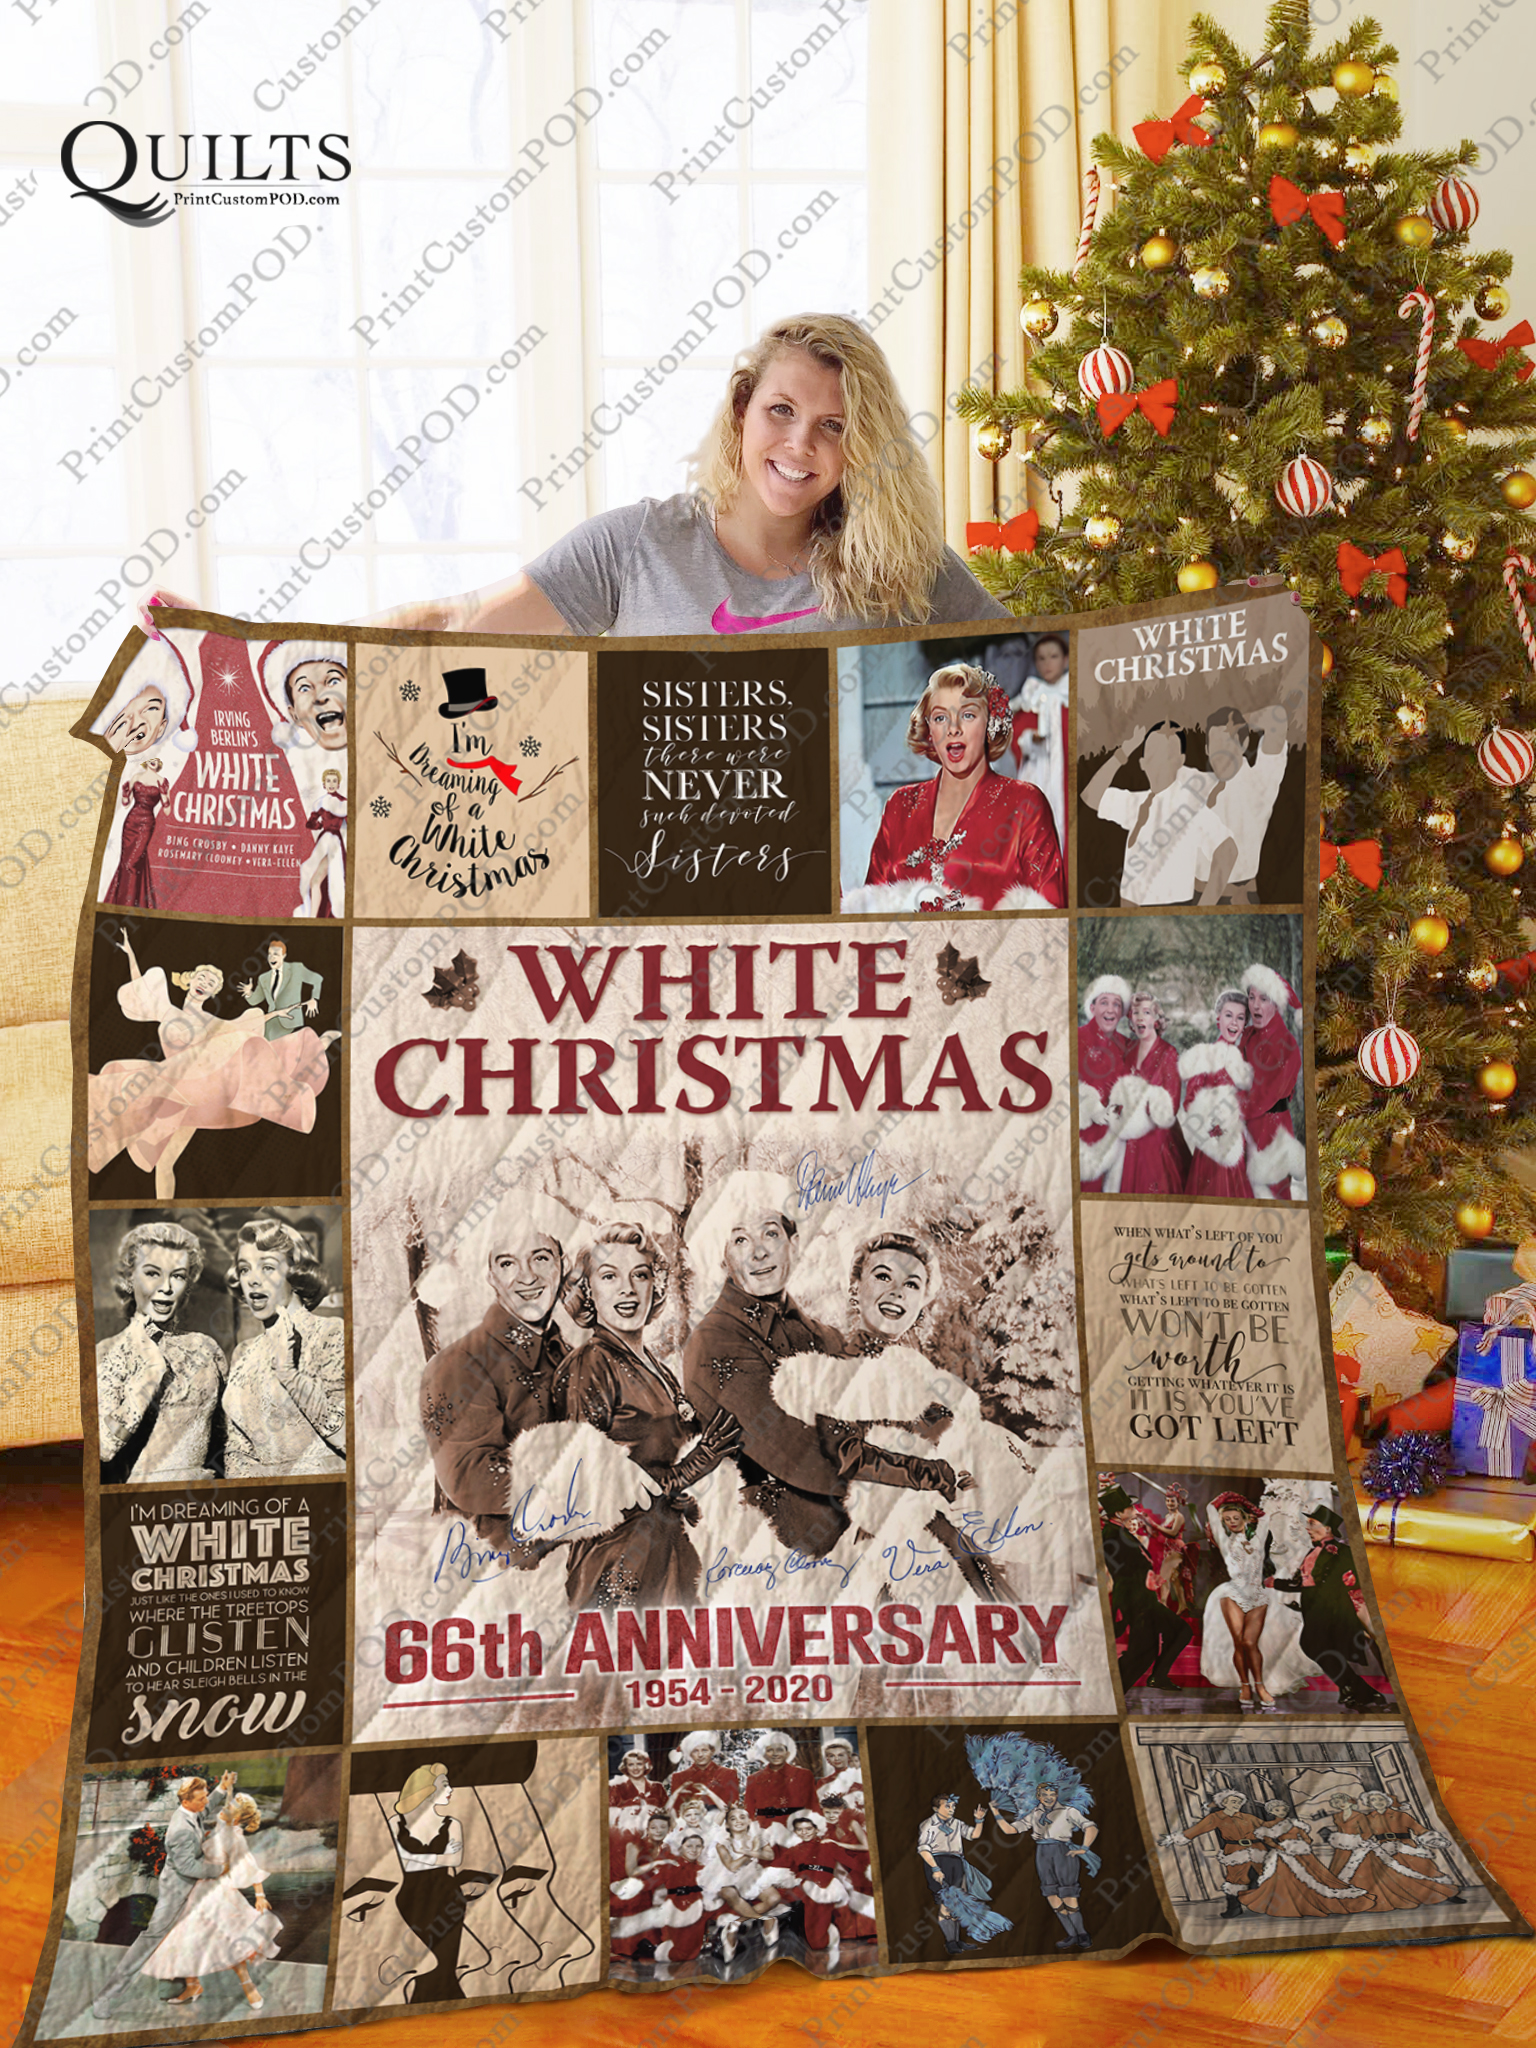 White christmas 66th anniversary quilt 1